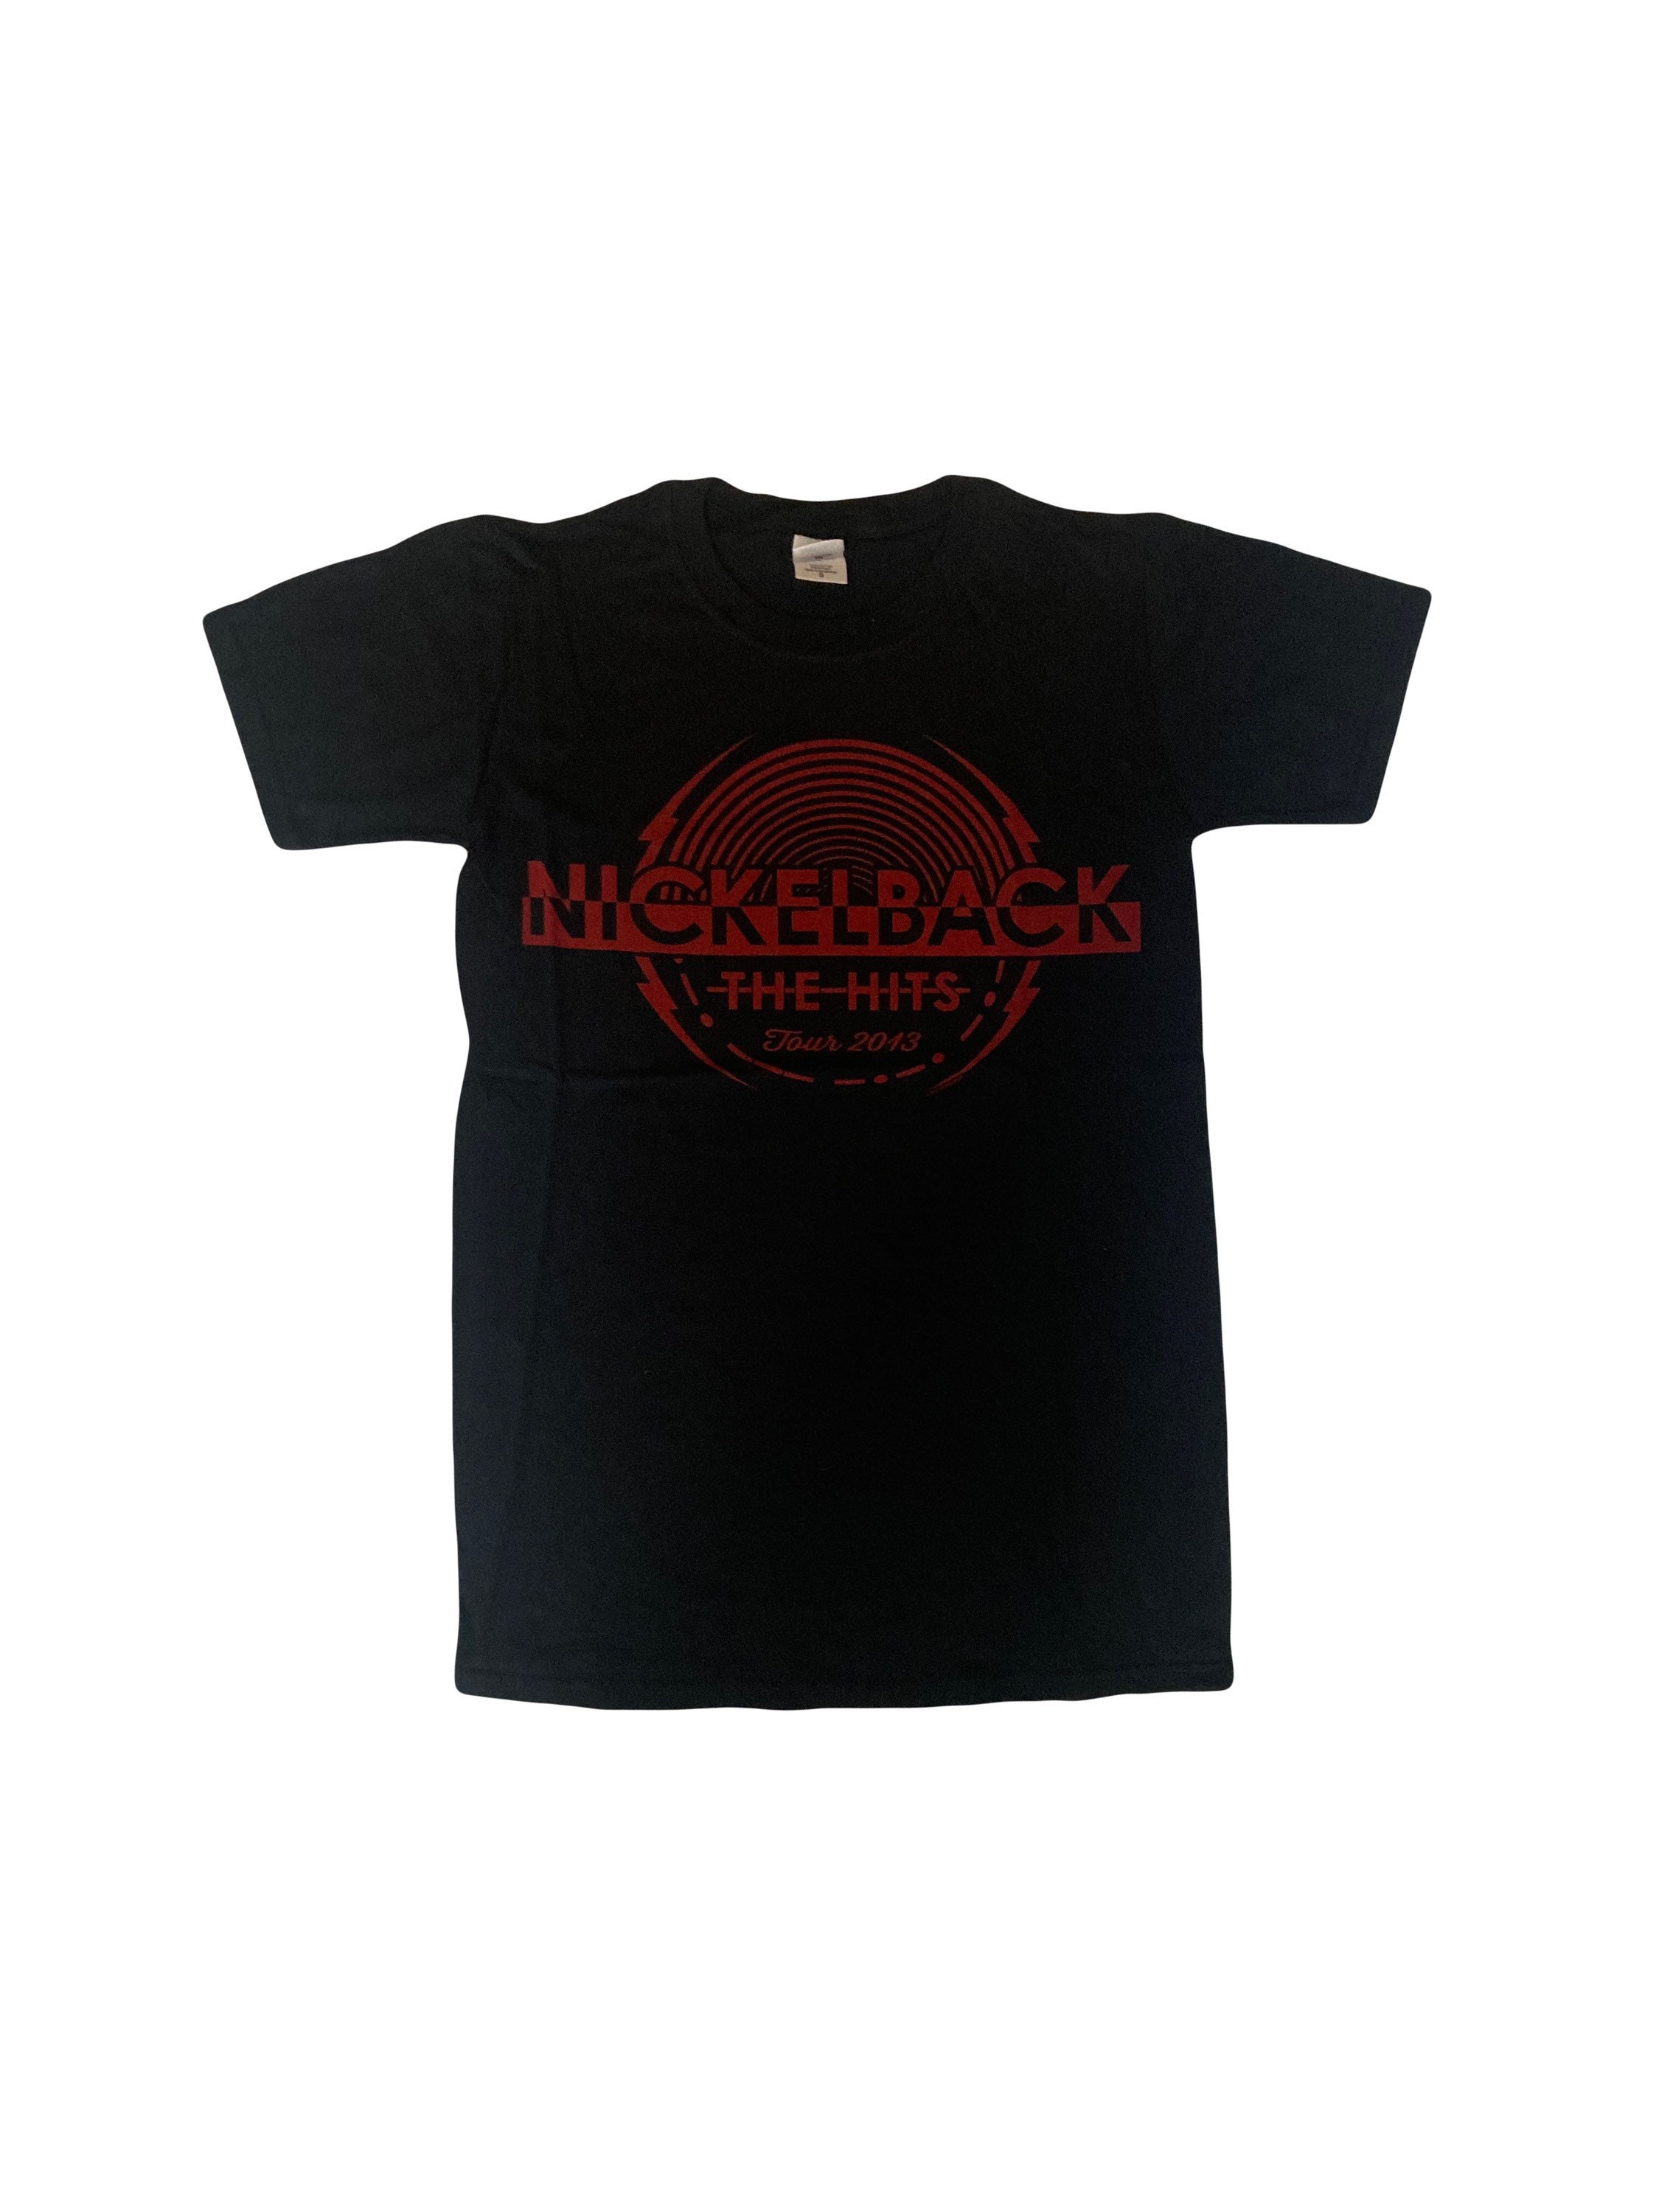 Band T Shirt Nickelback the Hits Tour 2013 Size Small Unisex - Etsy